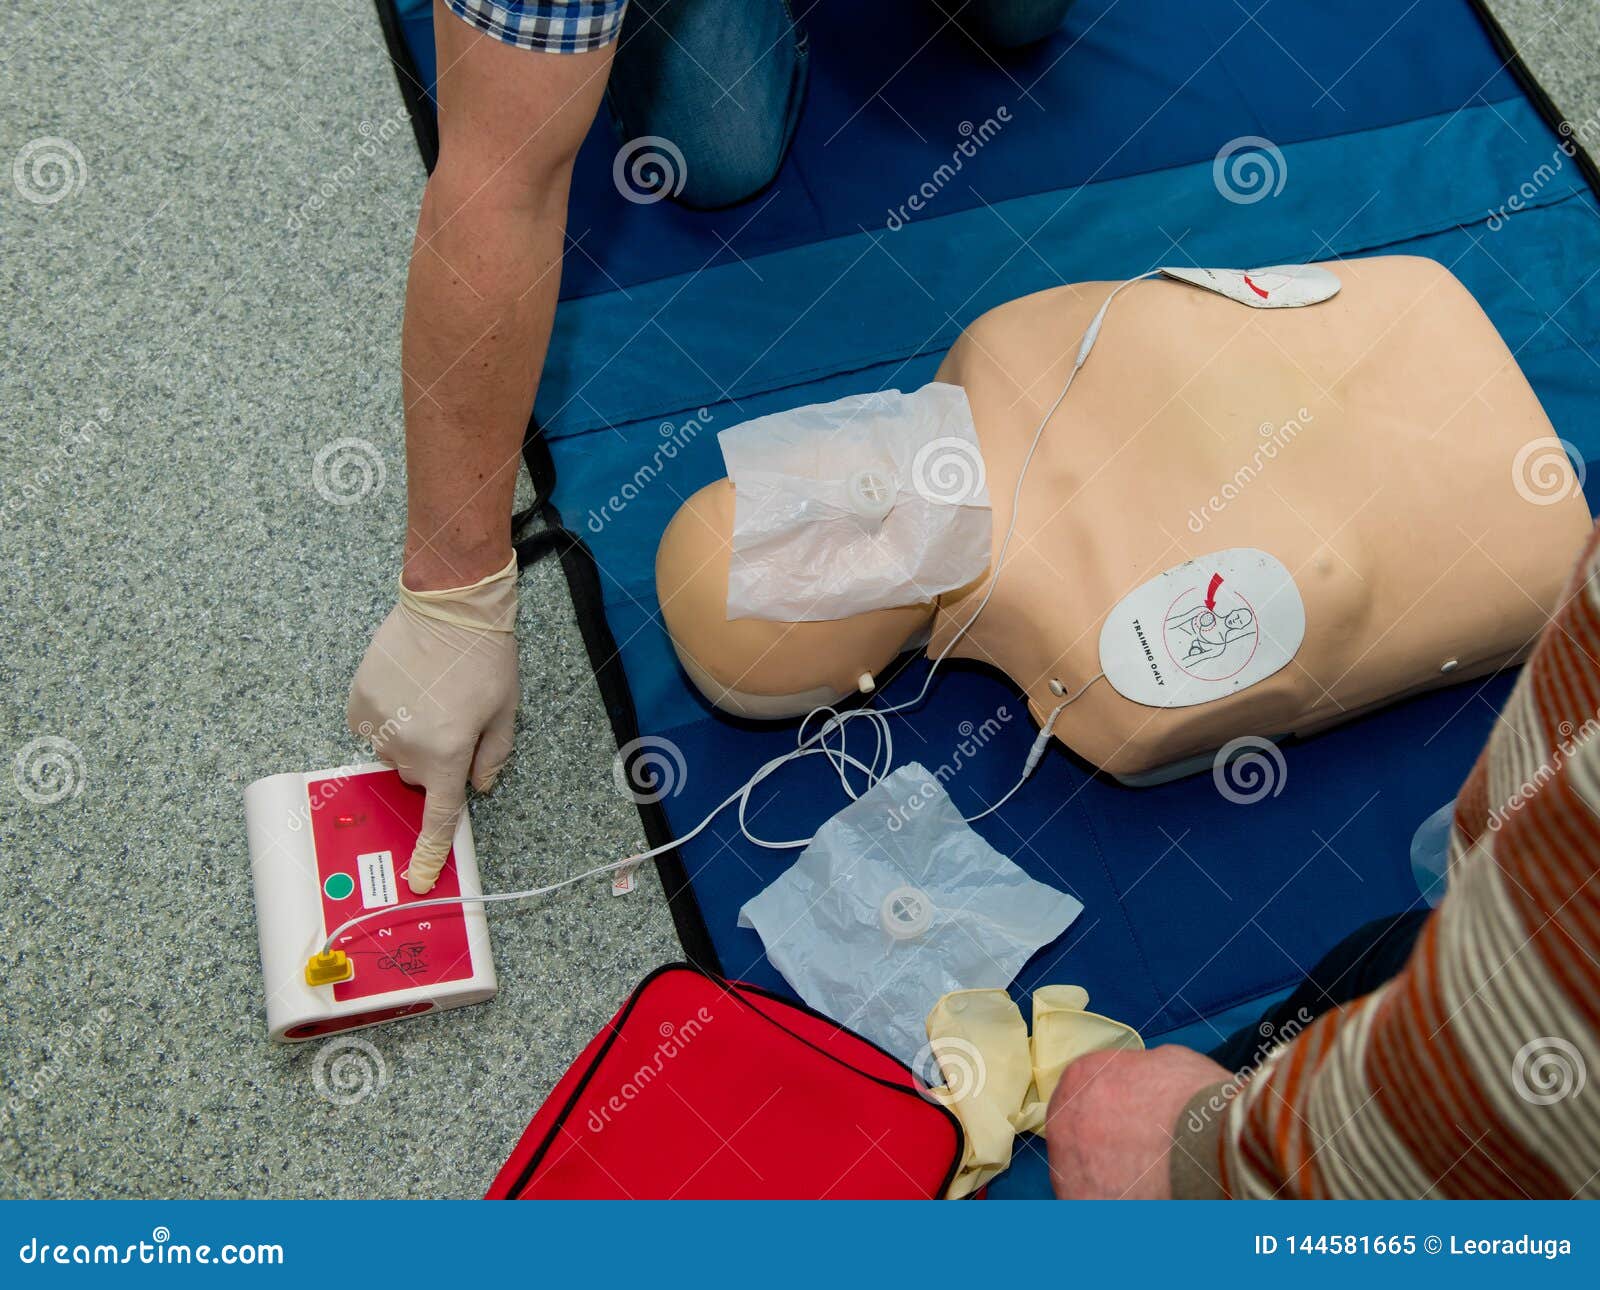 first aid cardiopulmonary resuscitation course.